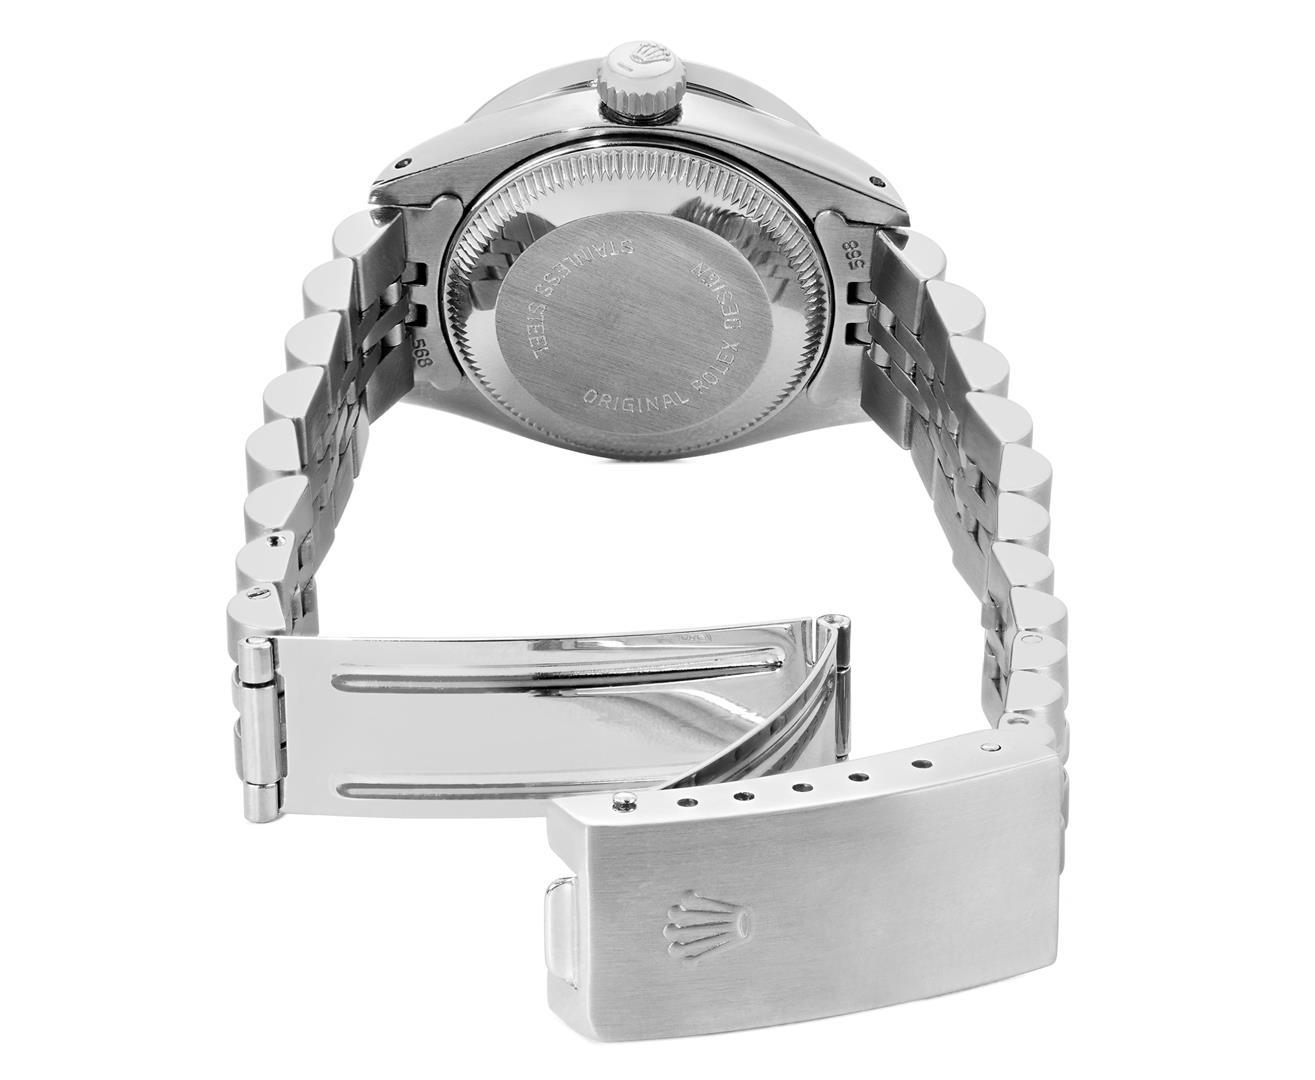 Rolex Ladies Stainless Steel Silver Index Steel Diamond Bezel Date Watch With Ro